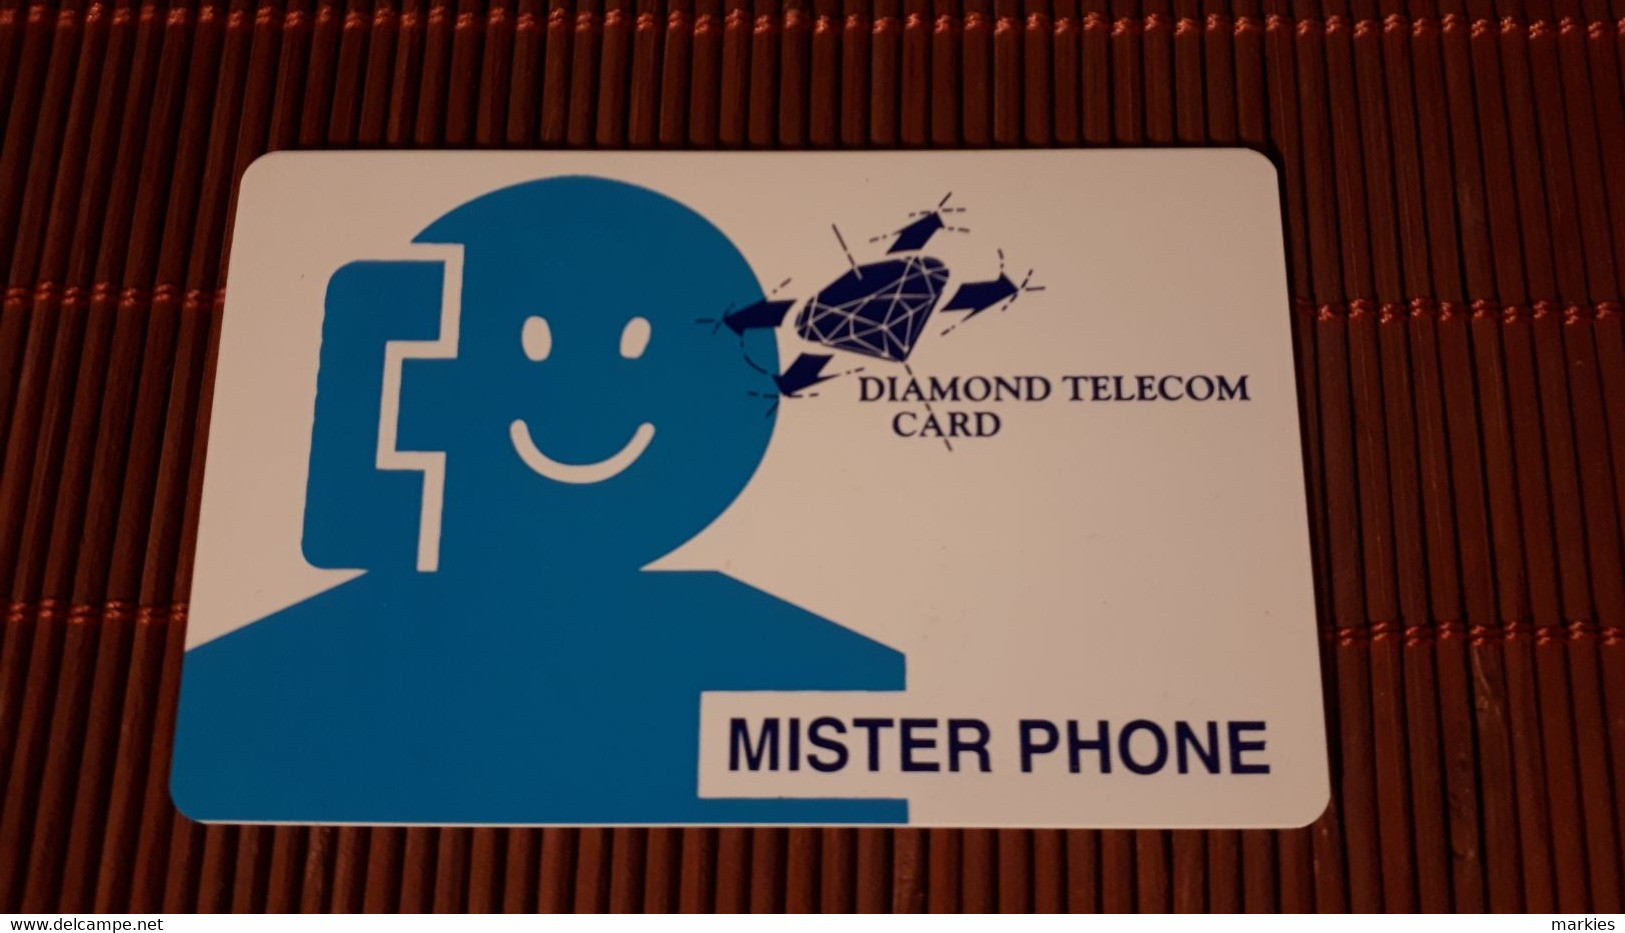 Diamond Telecom 1 Prepaidcard Mister Phone (Mint,New) Expiry Dat 31-1-97  Rare - Onbekende Oorsprong